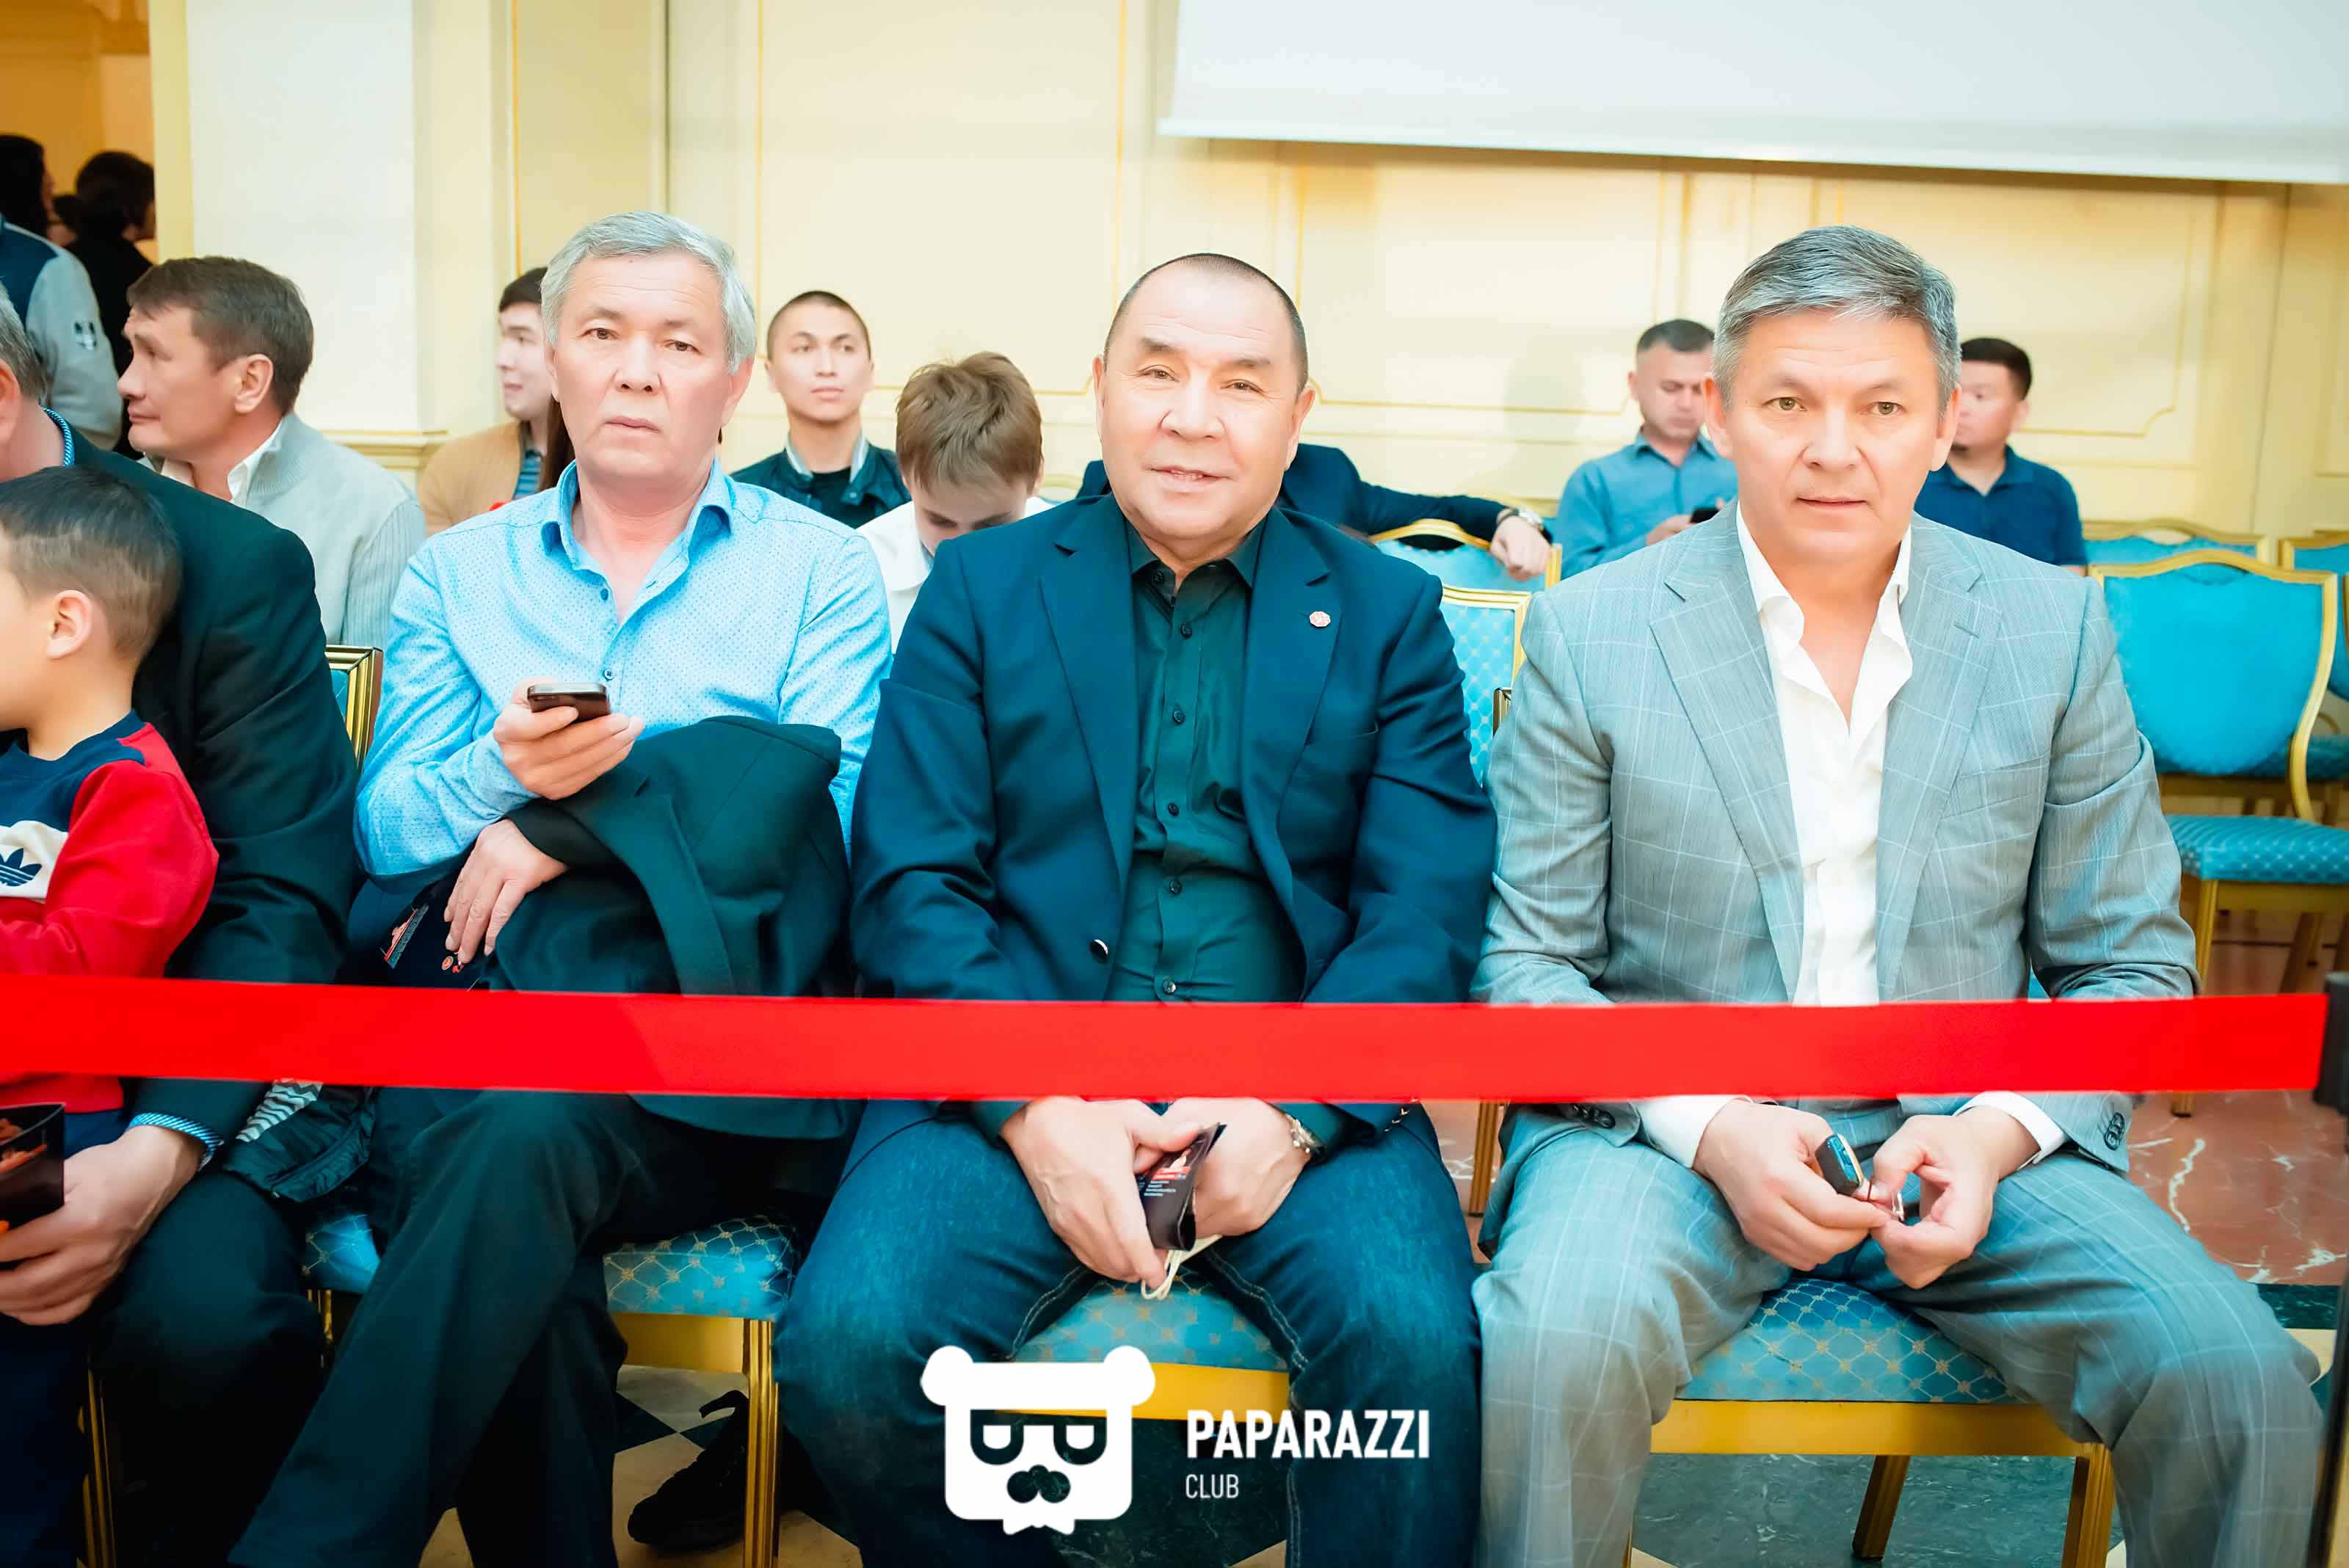  Аmbassador's cup Muaythai international championship, 25th anniversary of diplomatic relation between Thailand and Kazakhstan